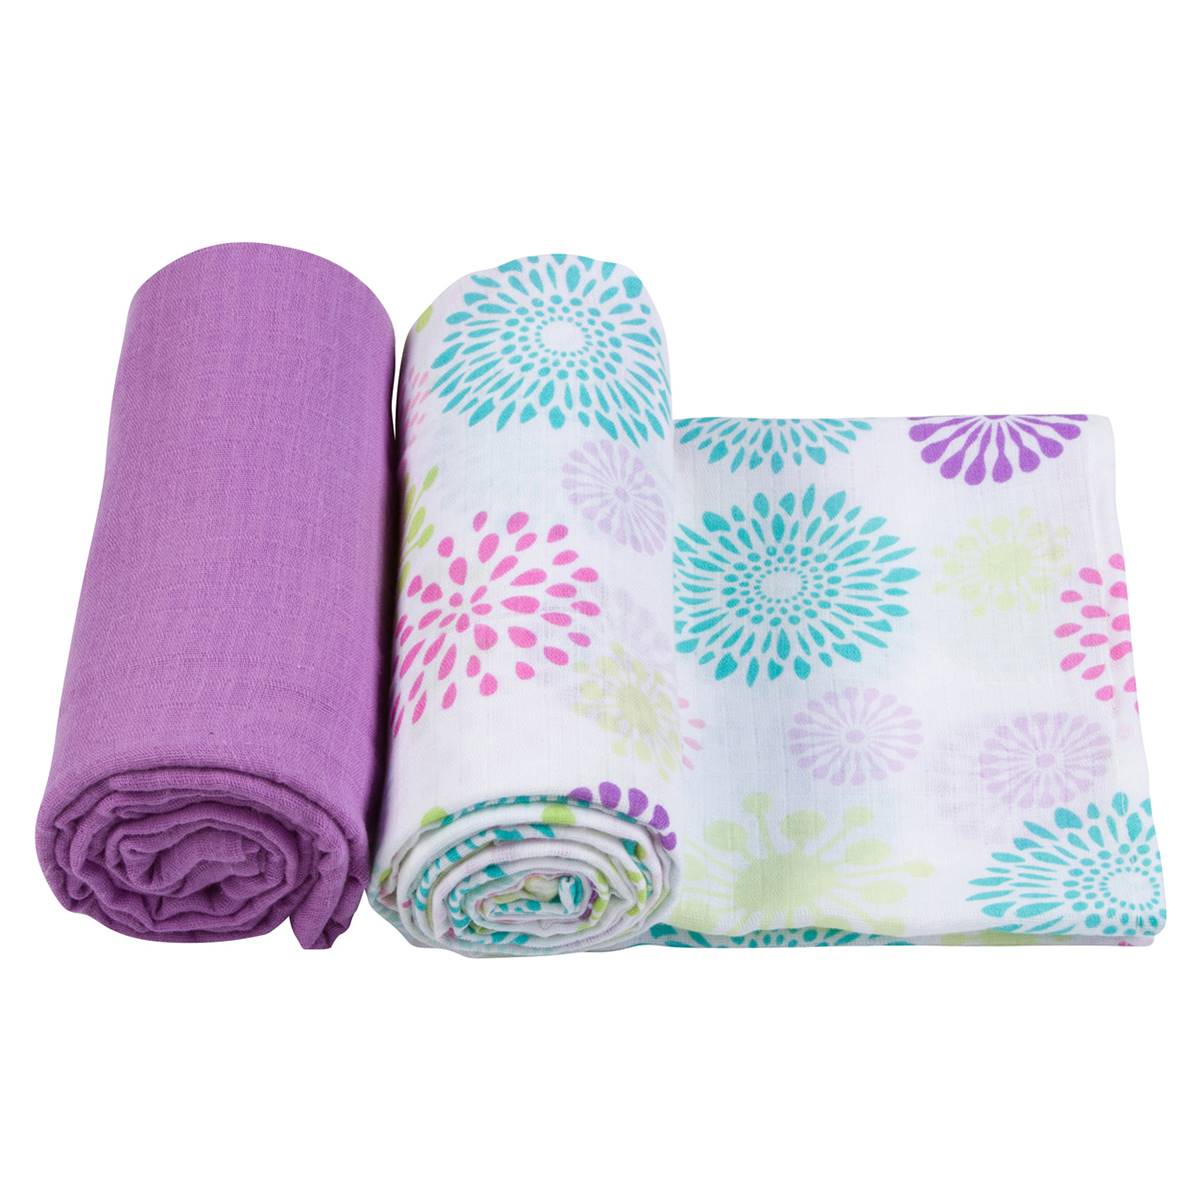 MiracleWare(R) 2-Pack Colorful Muslin Swaddling Blankets